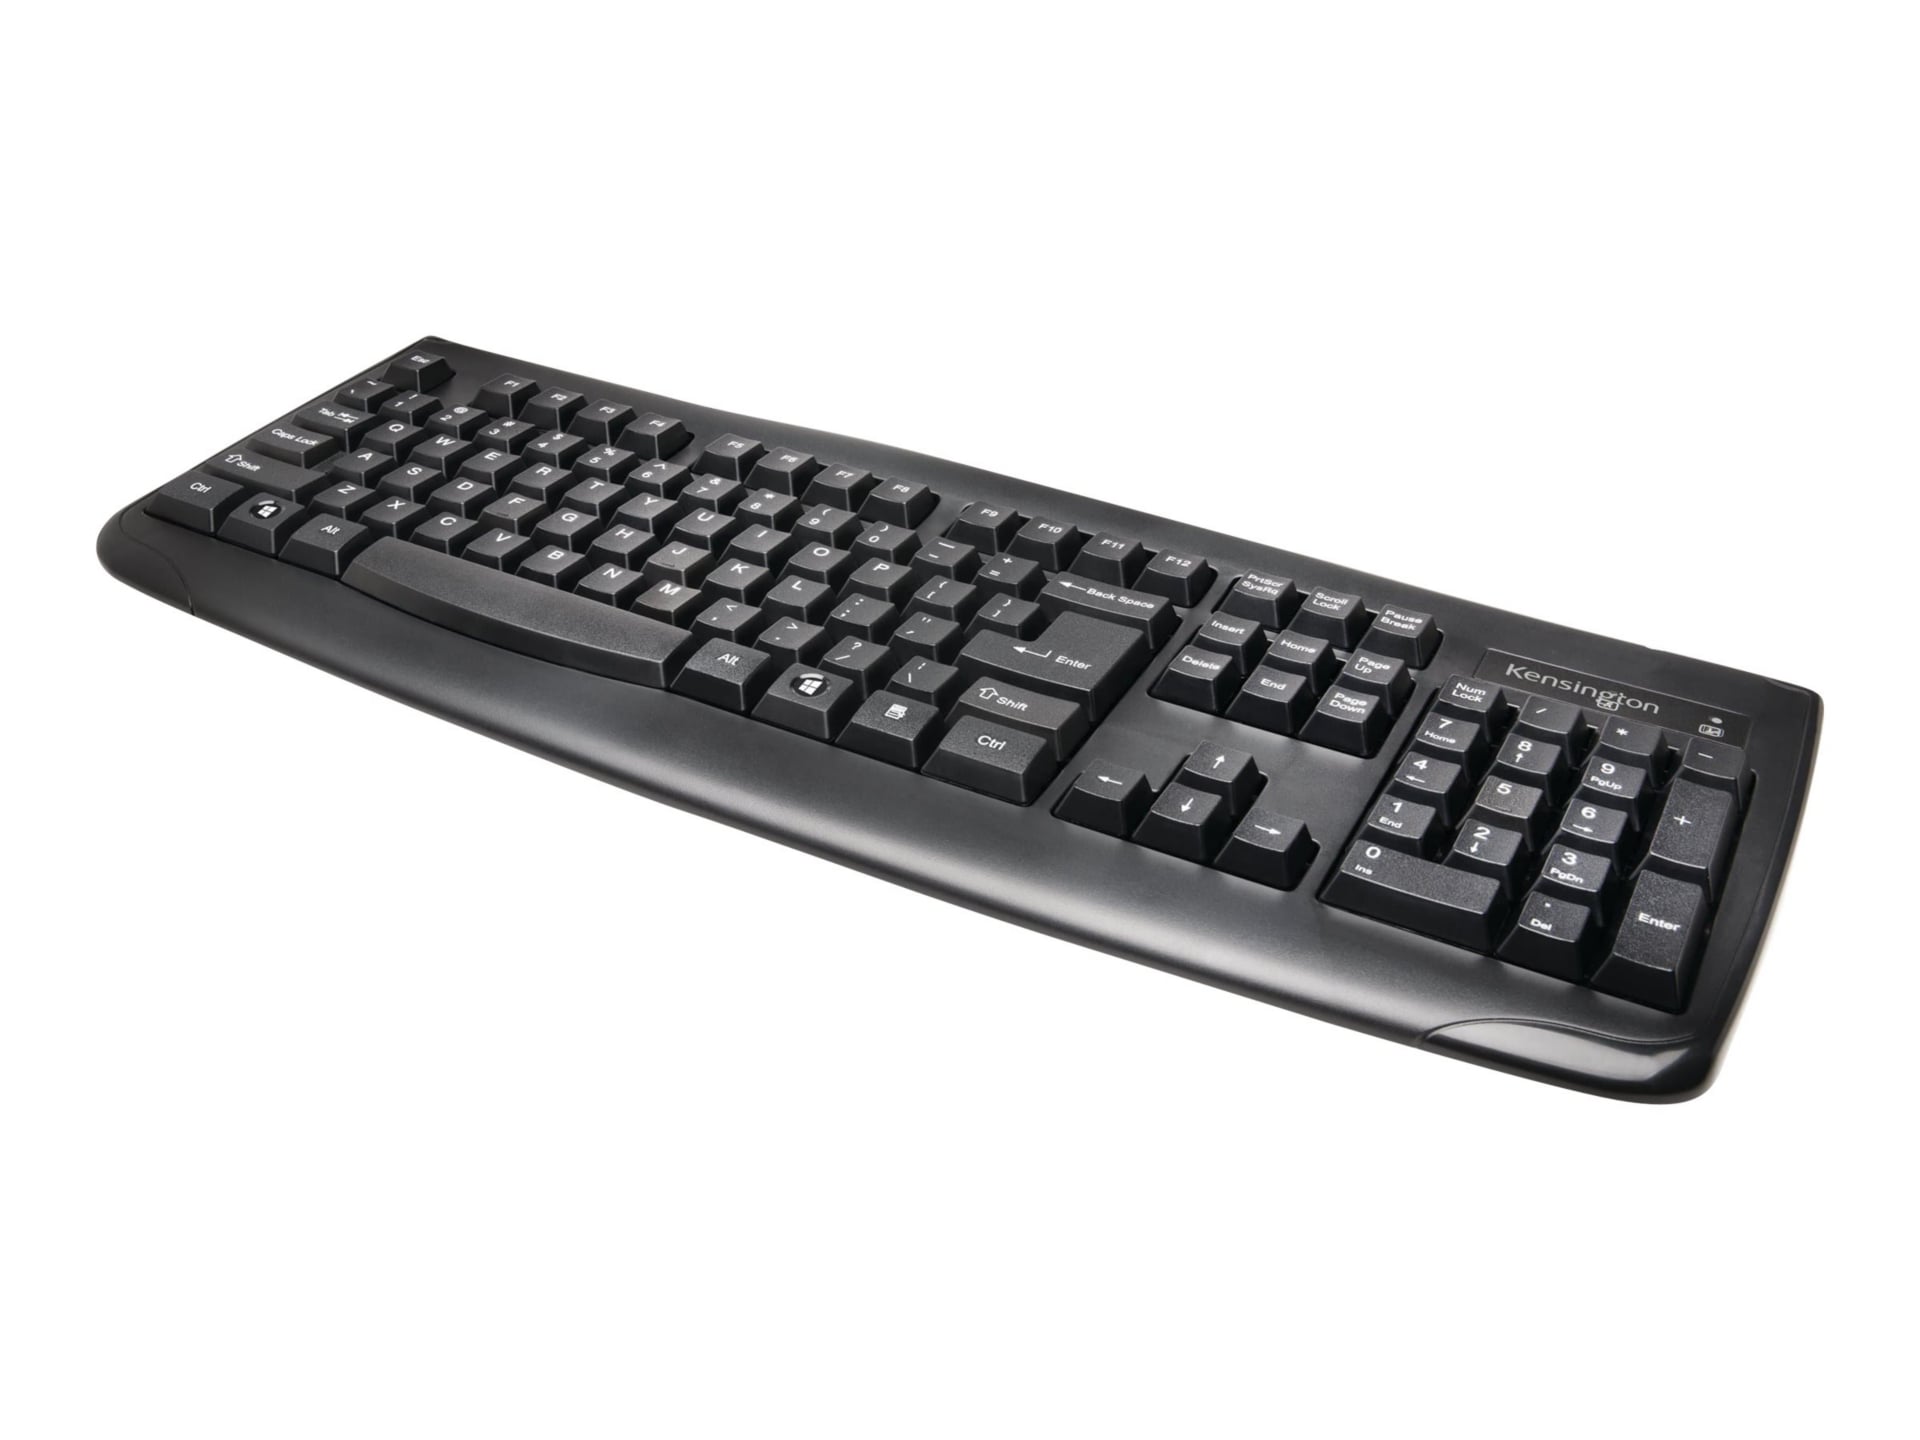 Kensington Pro Fit - keyboard - US - black Input Device